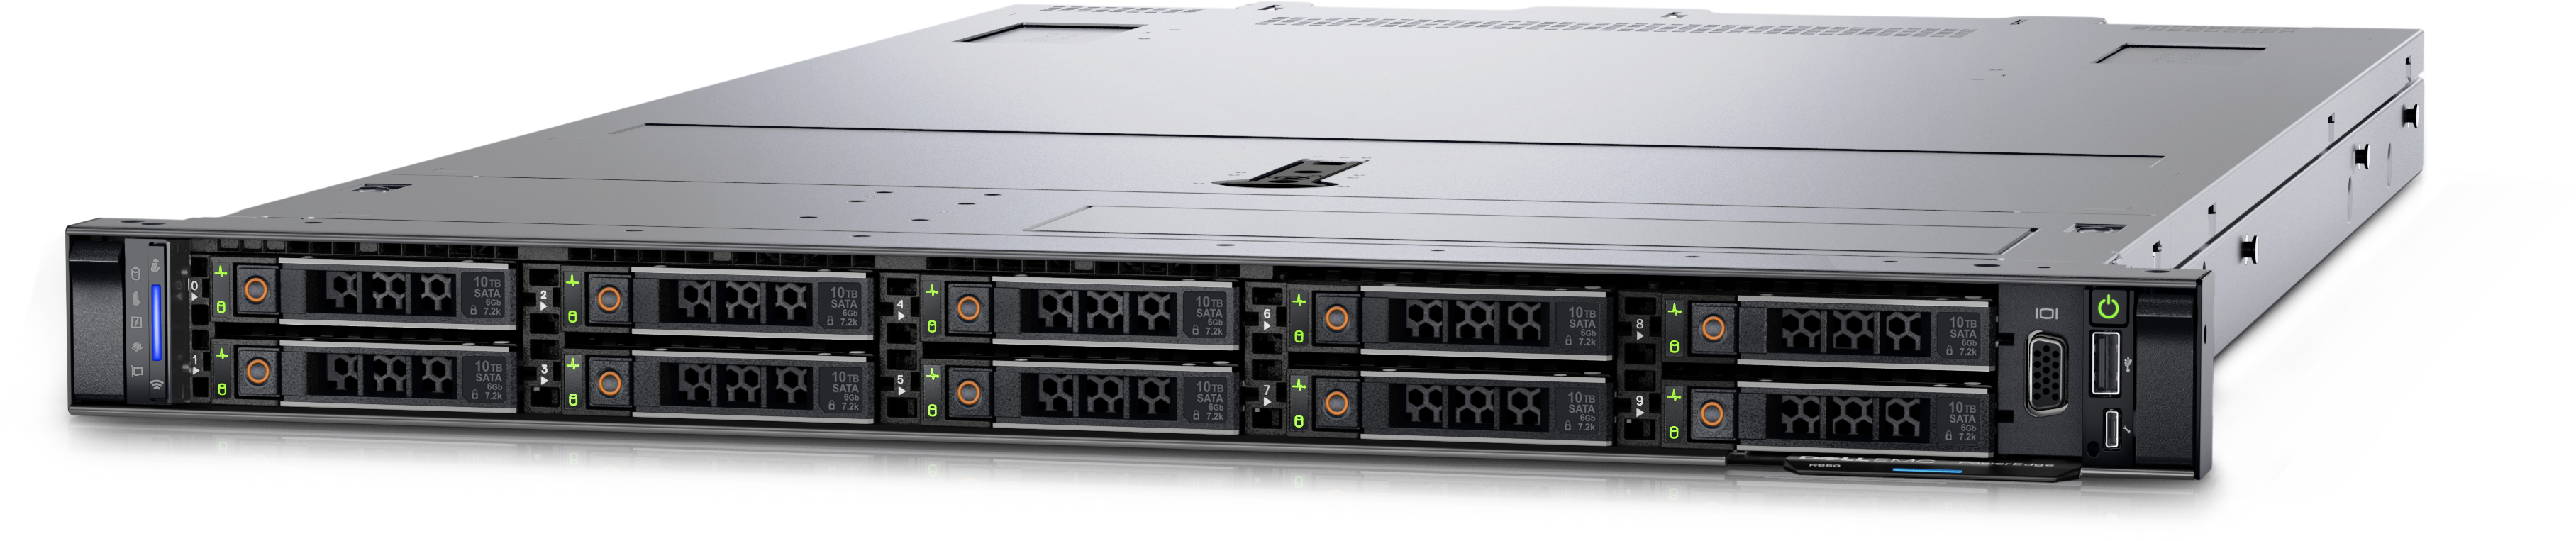 PowerEdge R650 Rack Server | Dell USA